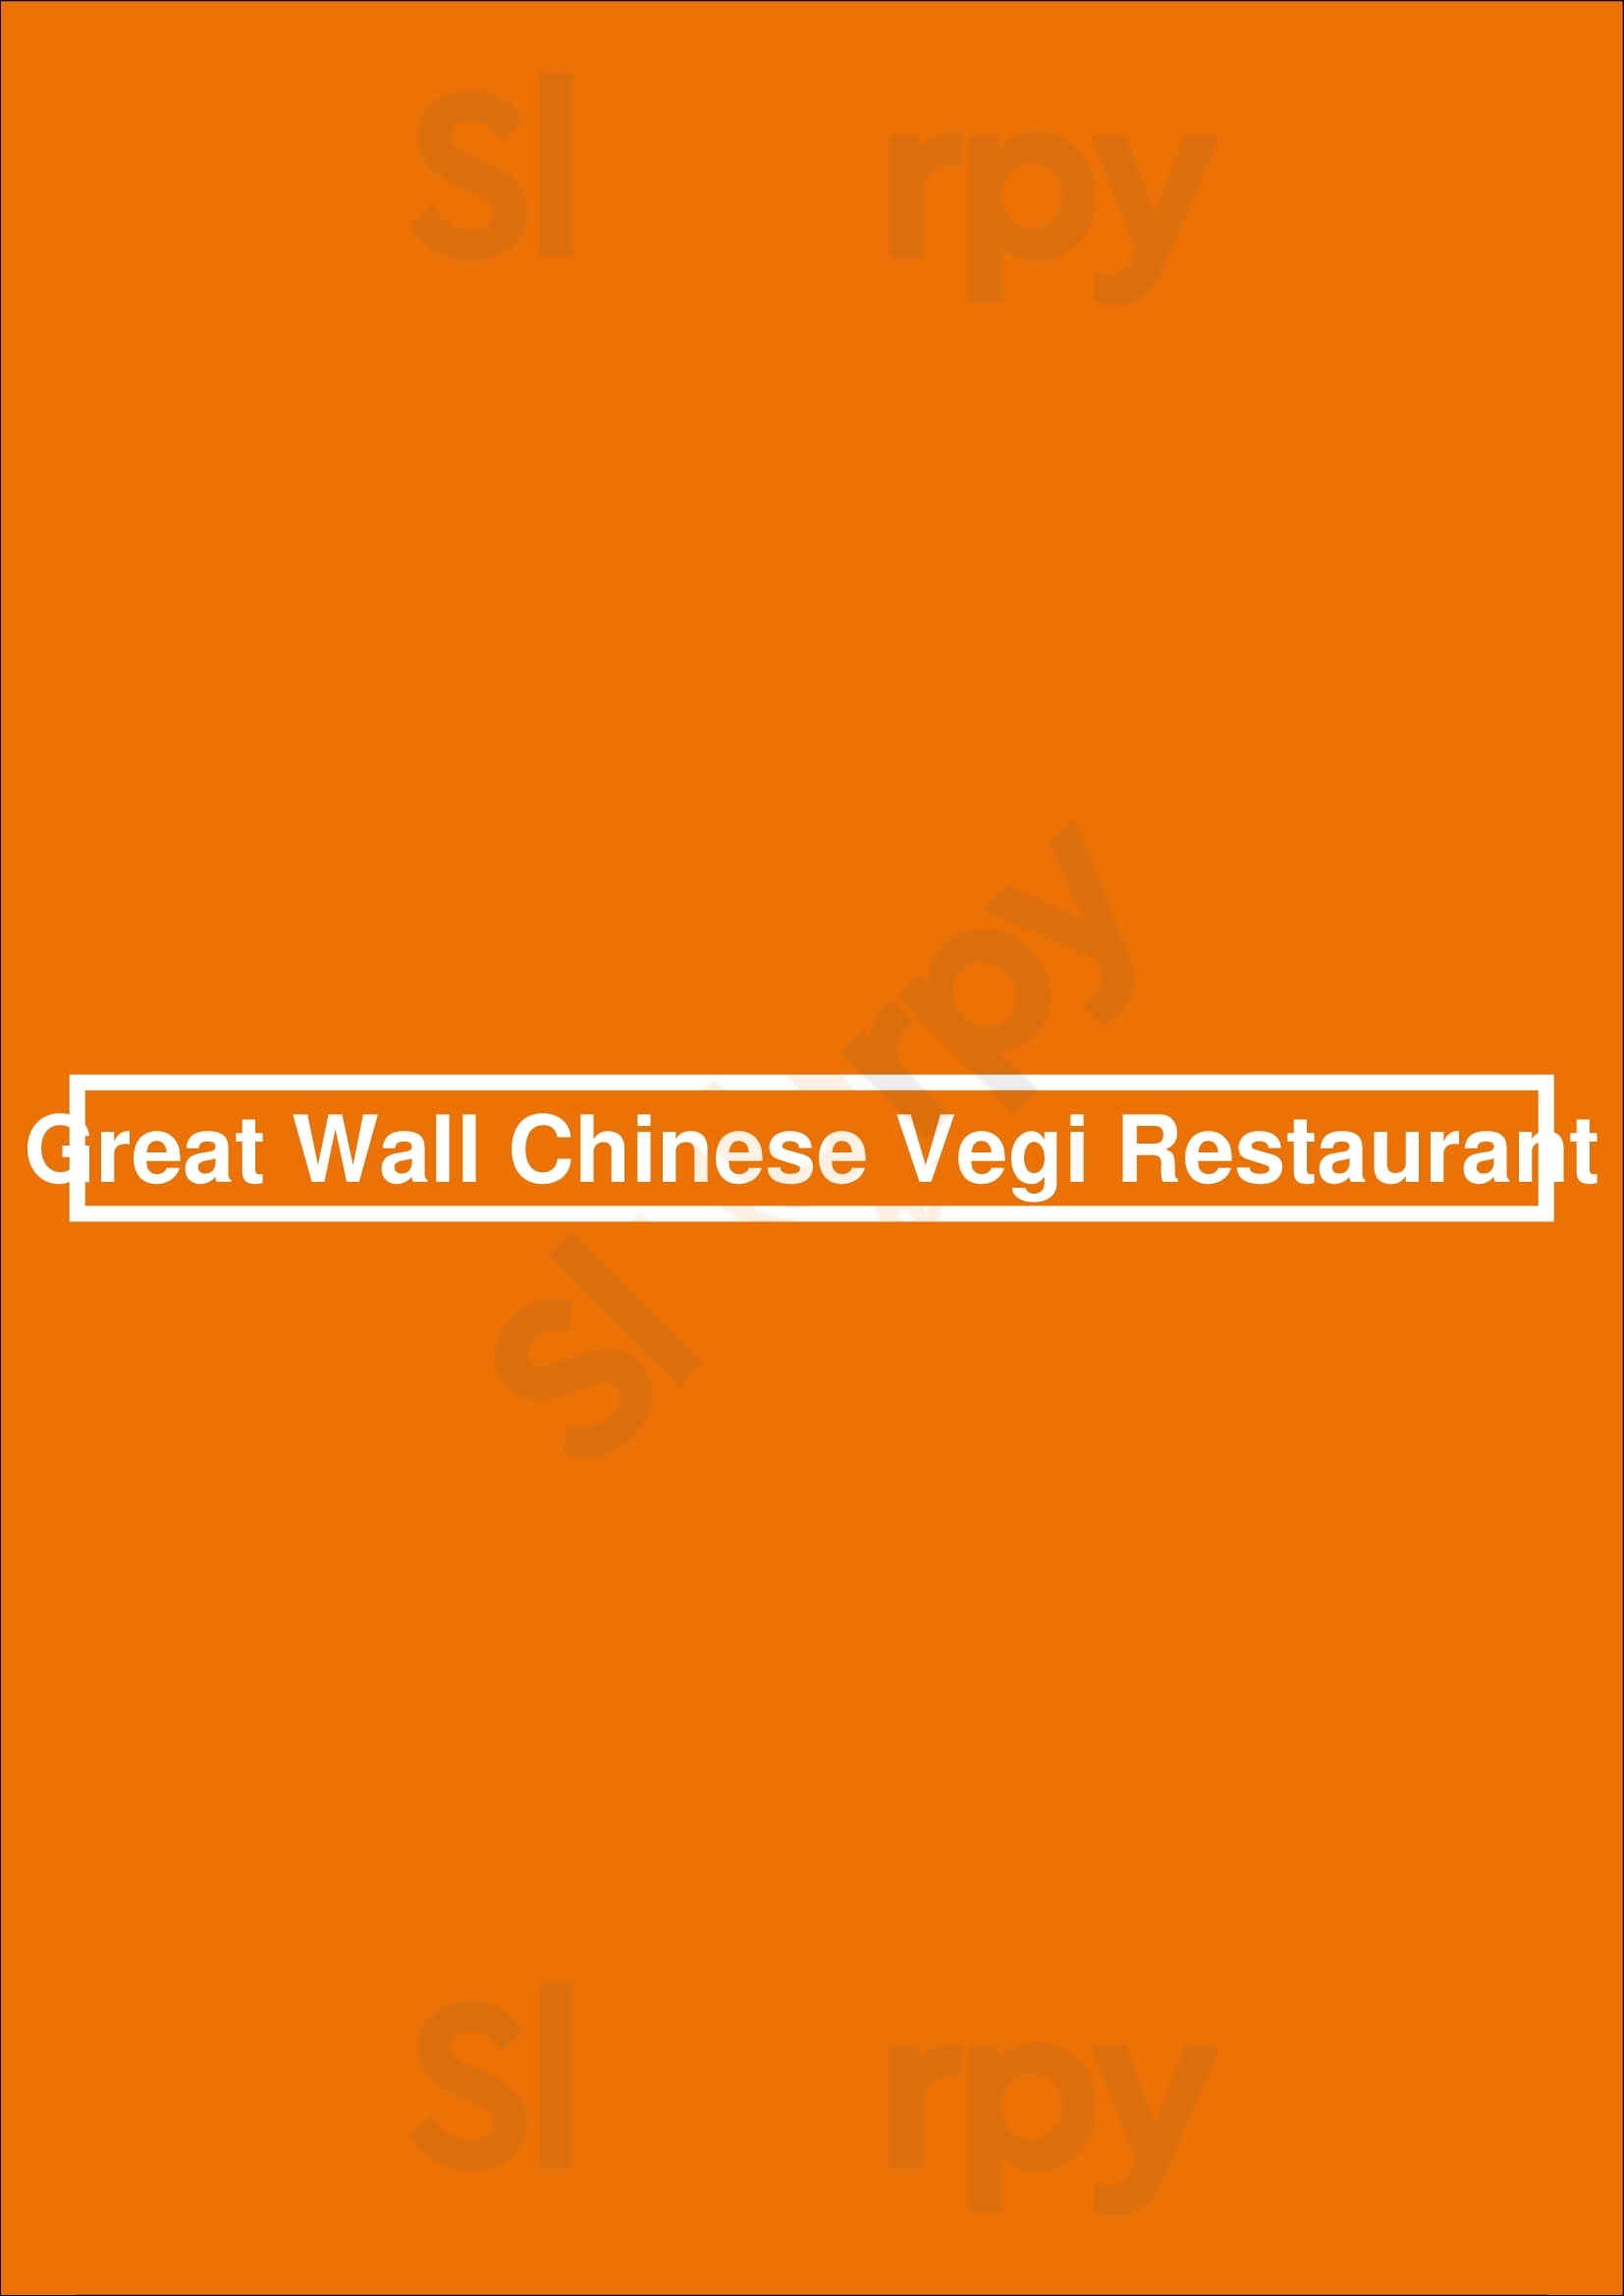 Great Wall Chinese Vegi Restaurant Oakland Menu - 1